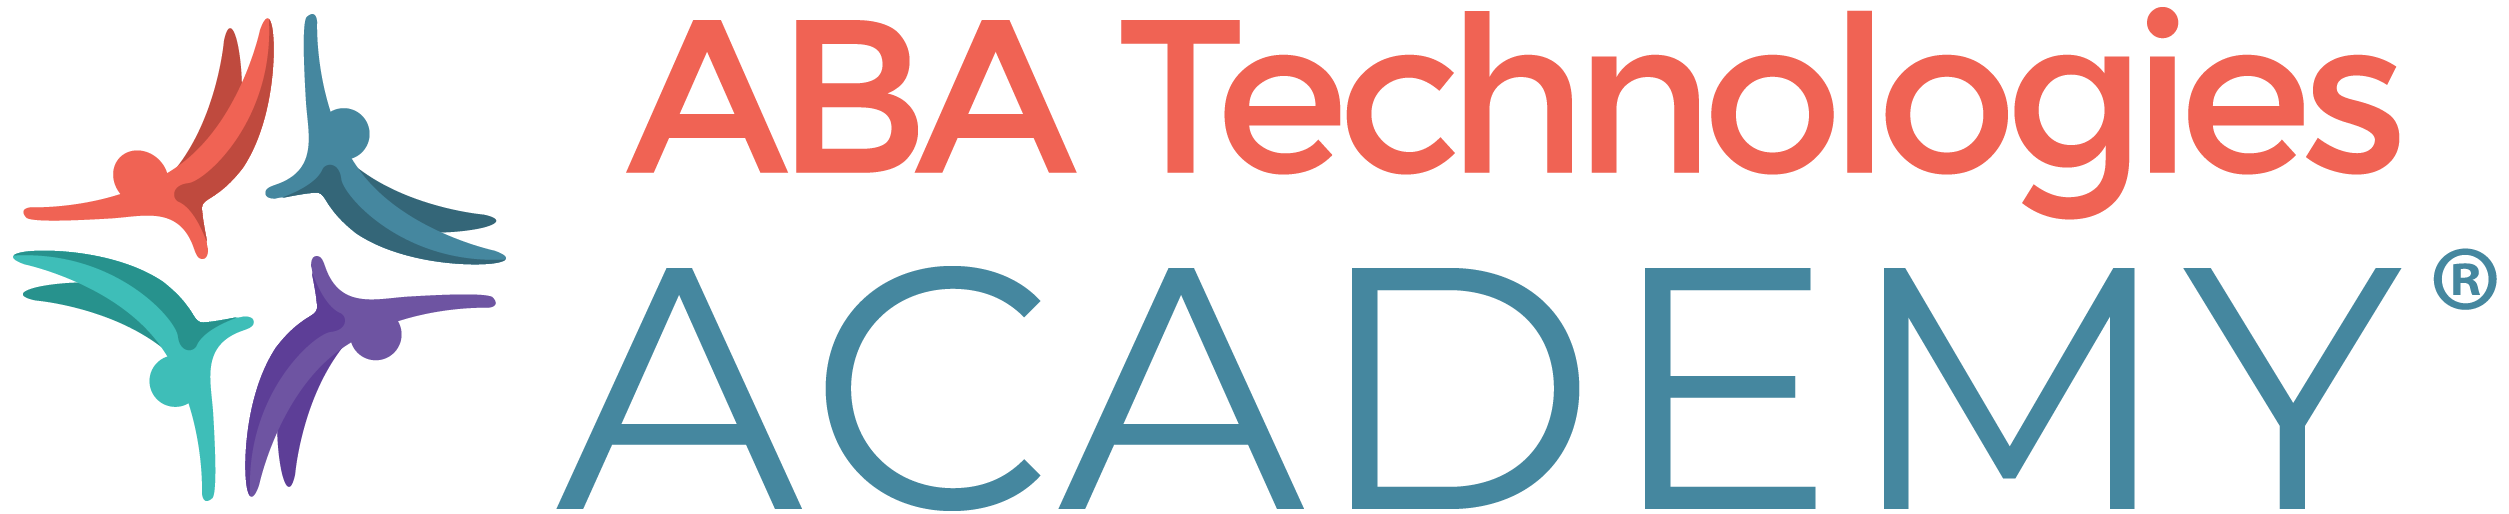 Large logo for ABA Tech Academy